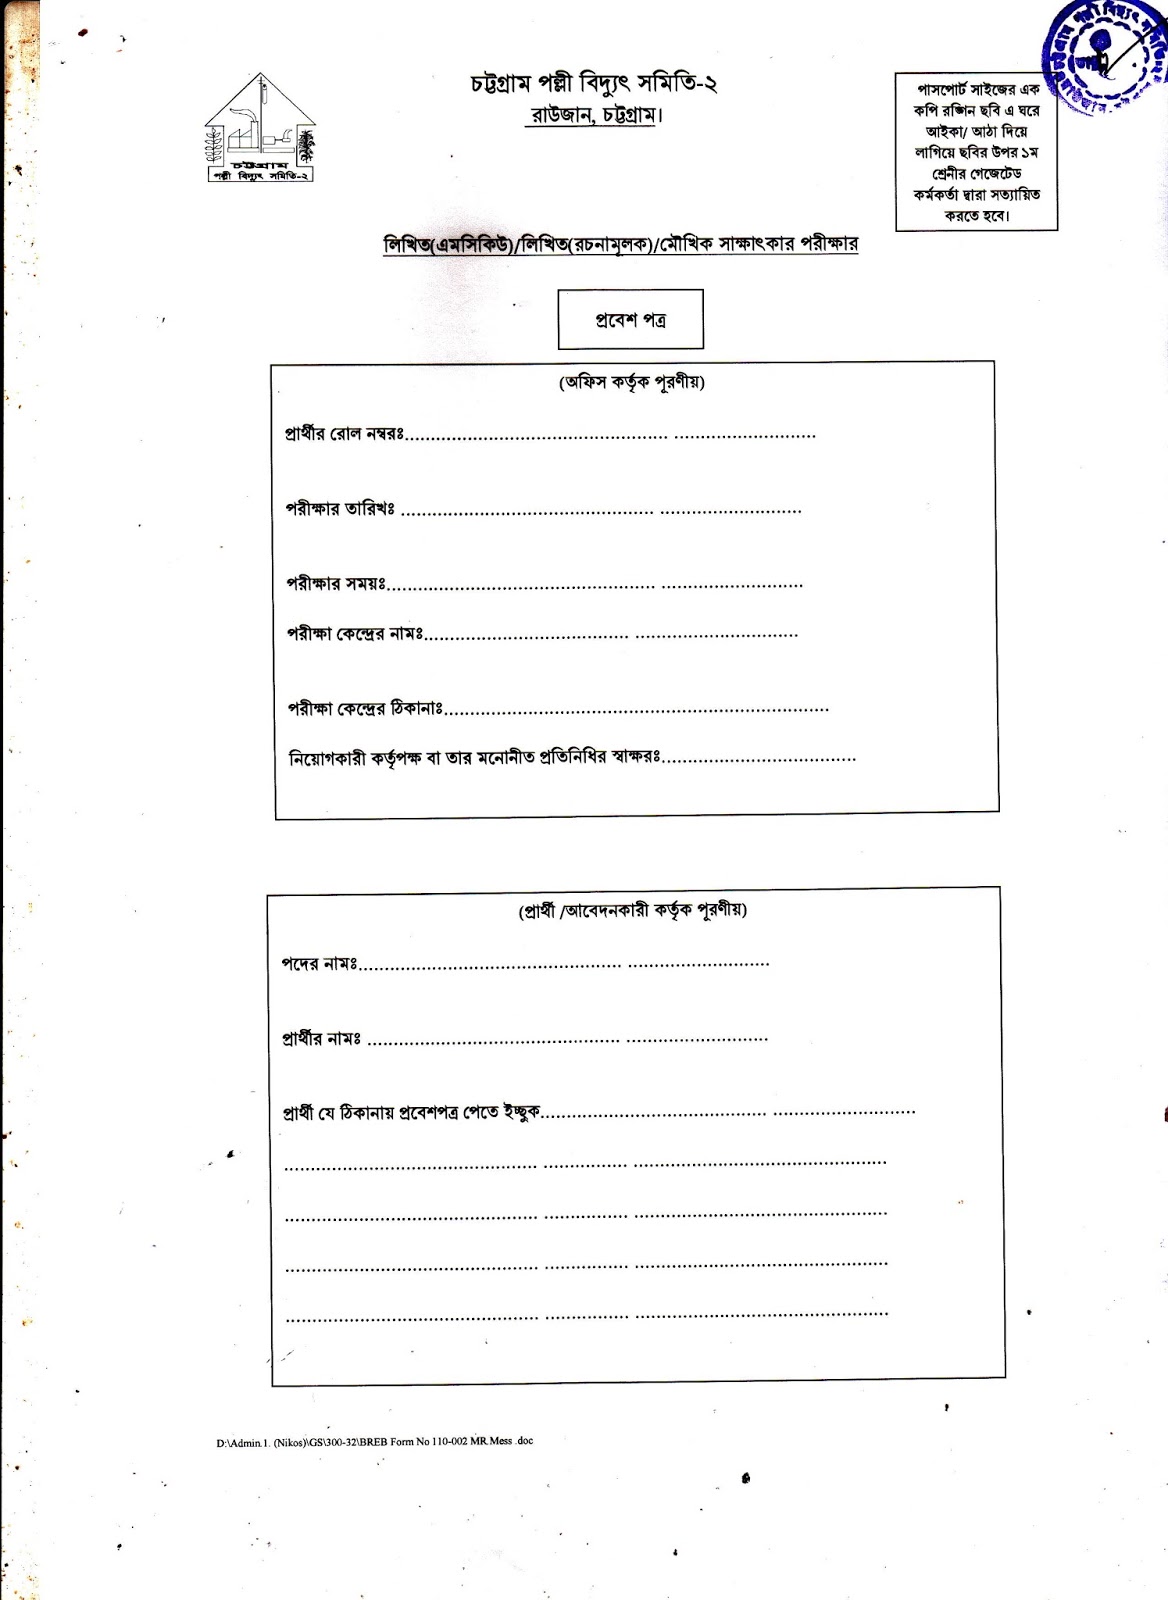 Chittagong Palli Bidyut Samity-2 Job Application Form